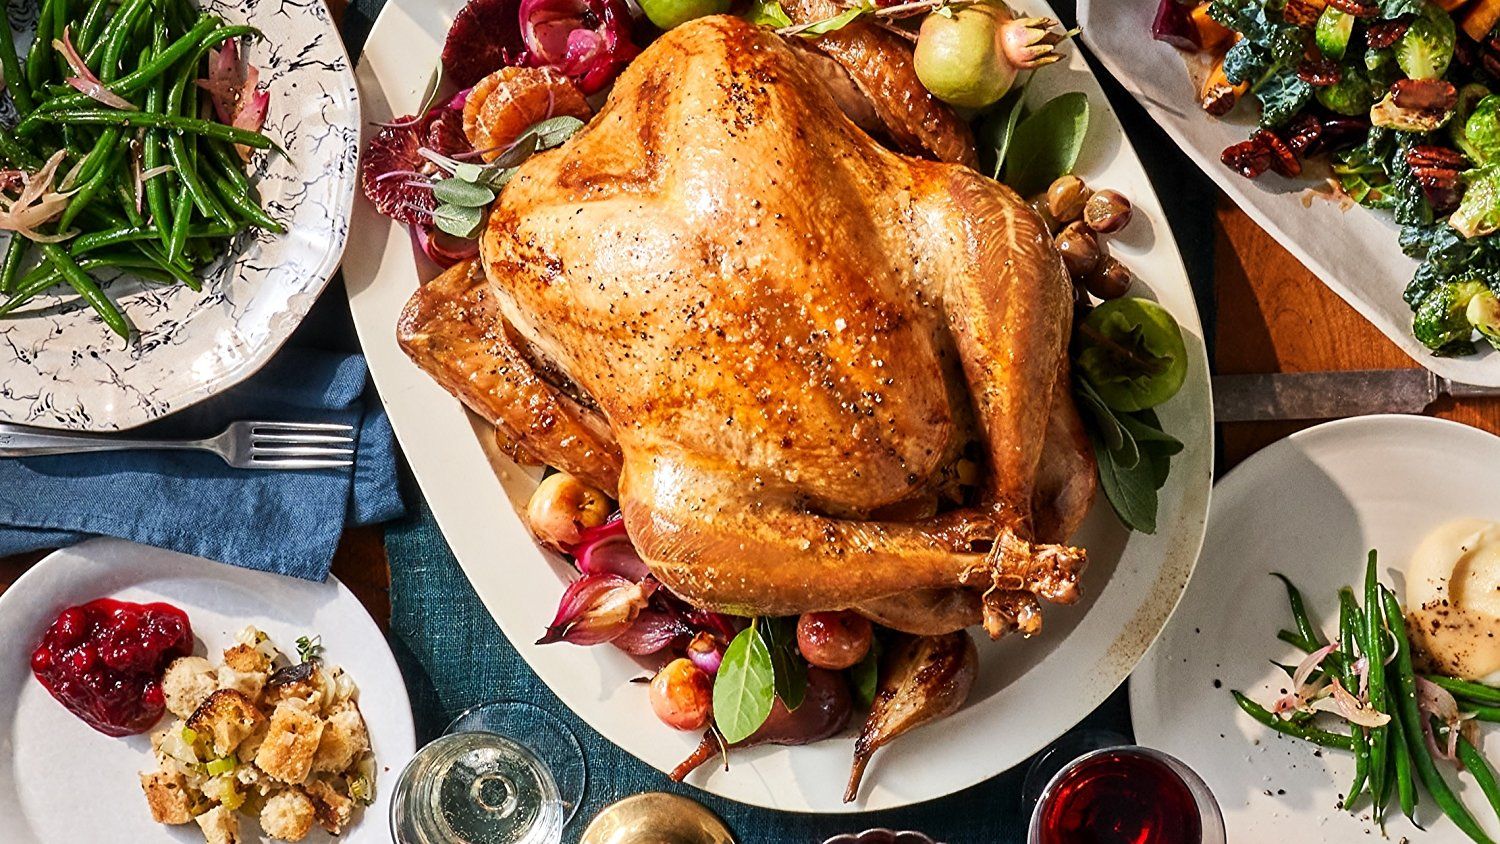 Next Happening: Holiday Turkey Available!